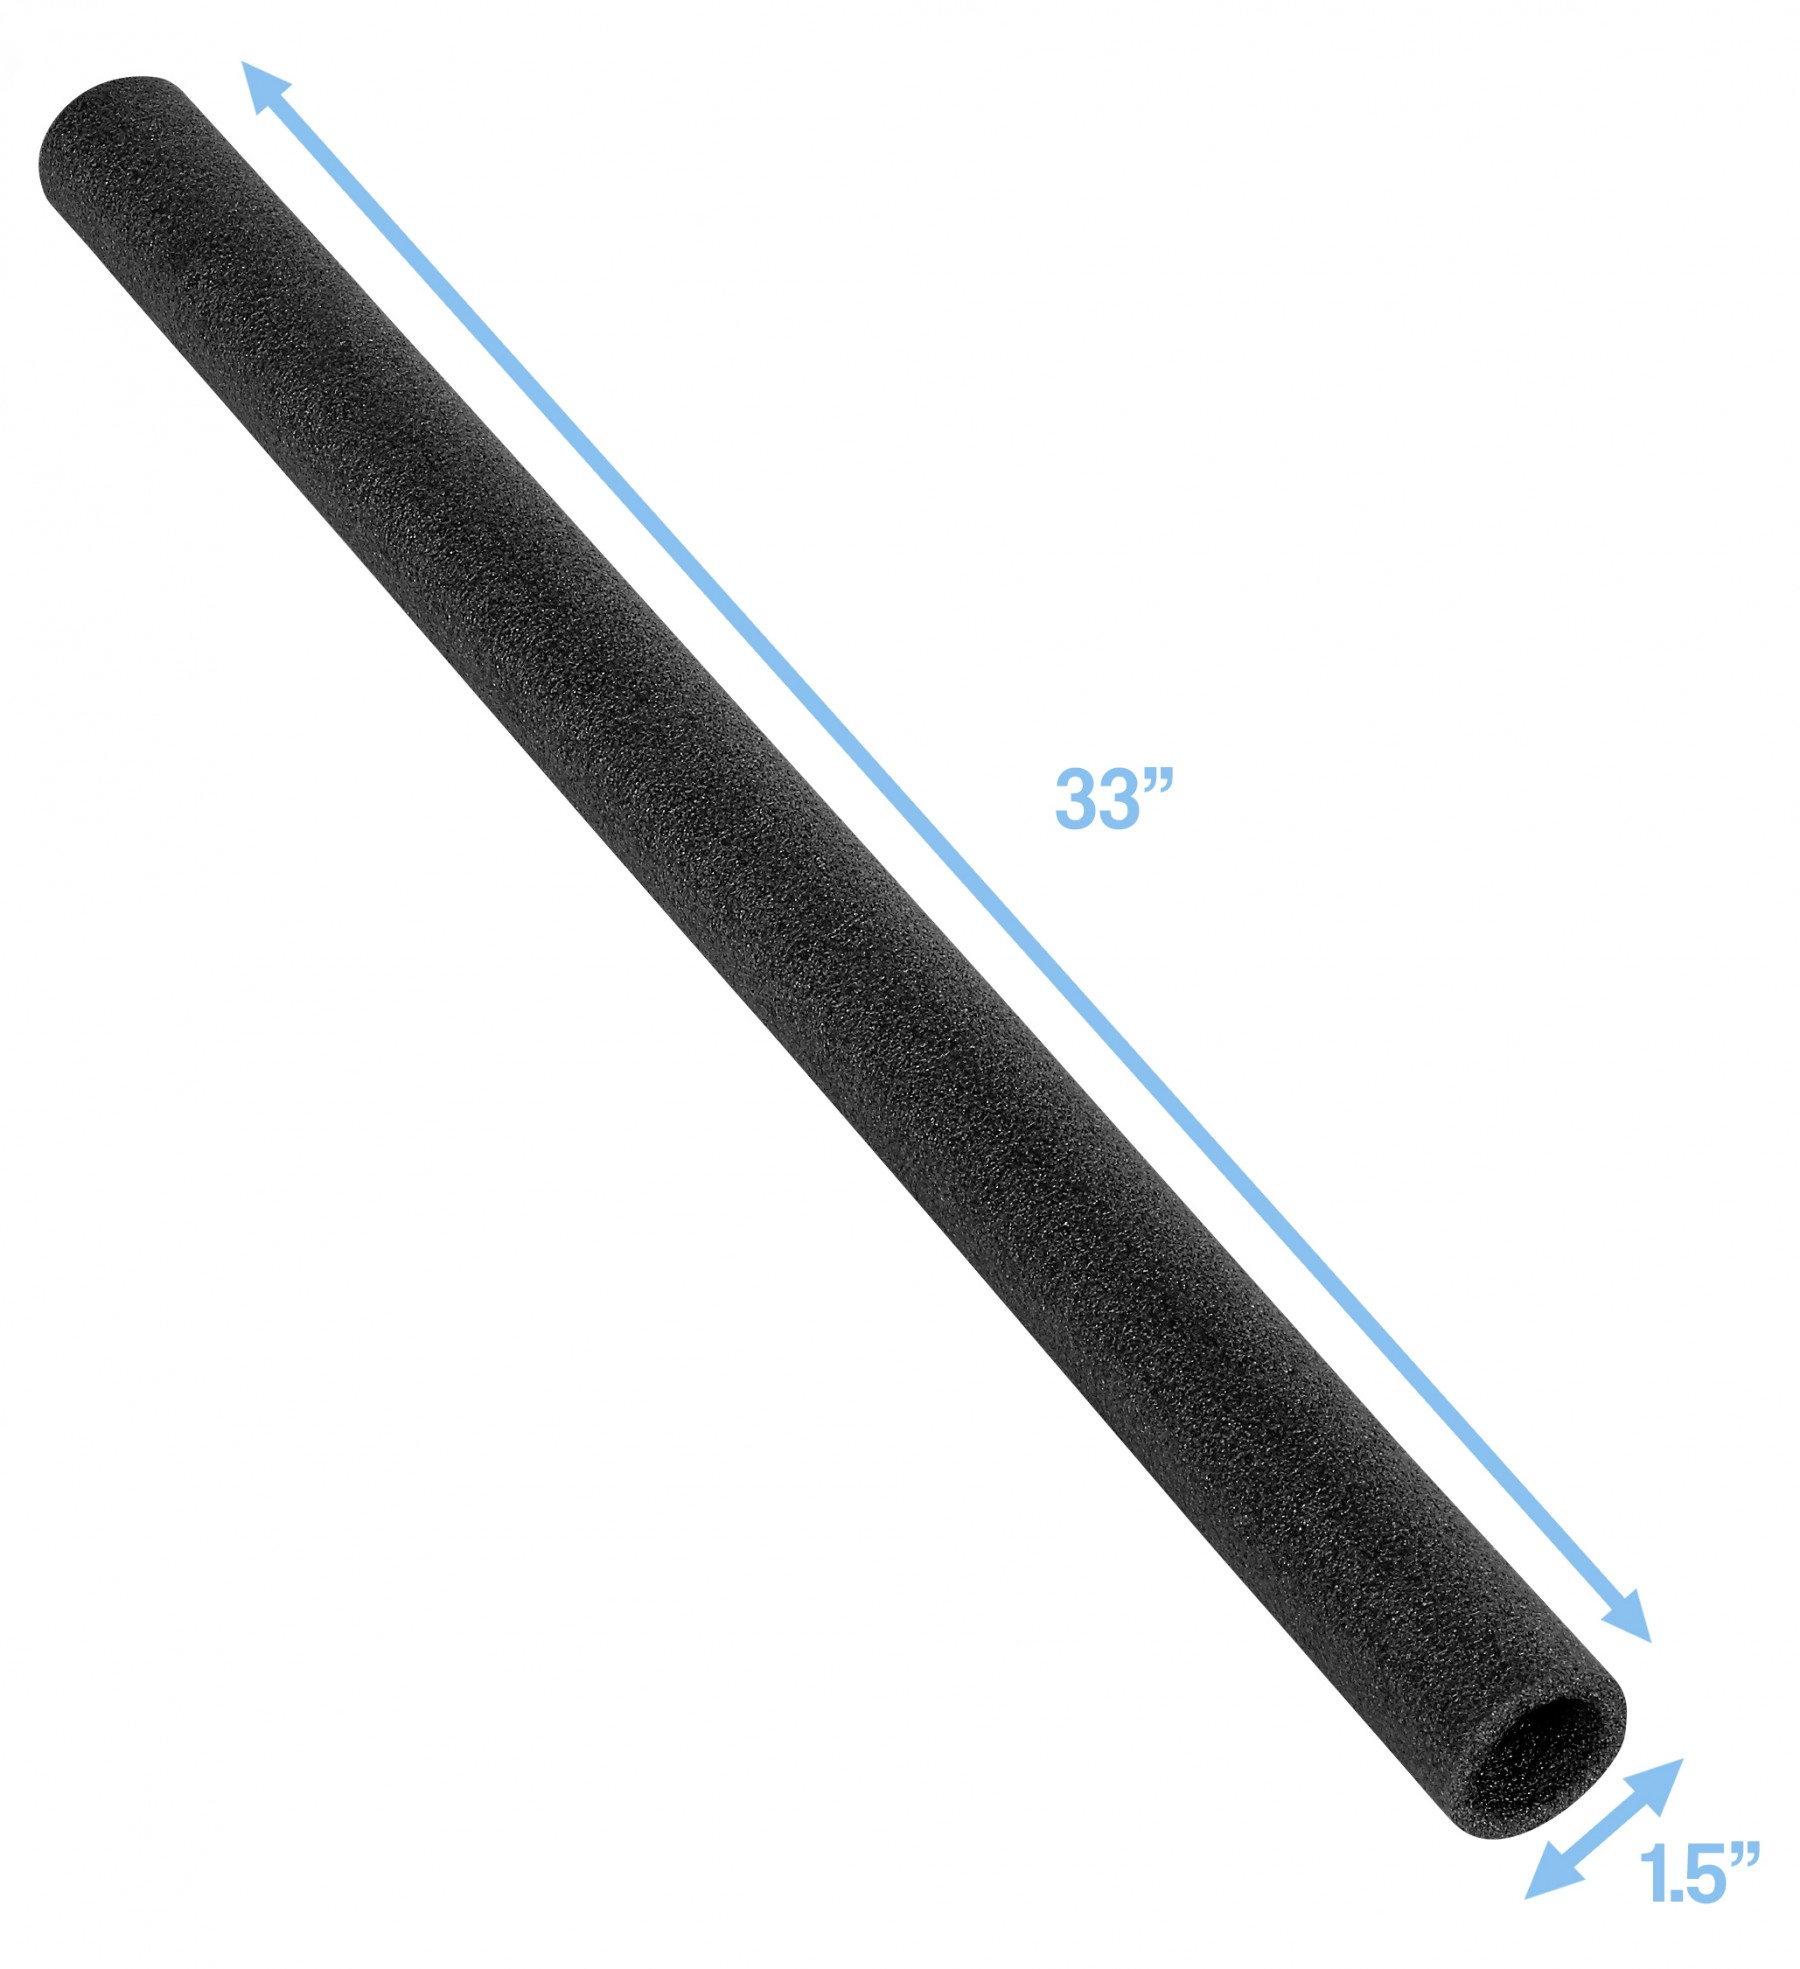 TEVEILS 33 Inch Trampoline Pole Foam Sleeves Protective Trampoline Pole Cover for 1.5 Diameter Pole Trampoline Accessory 